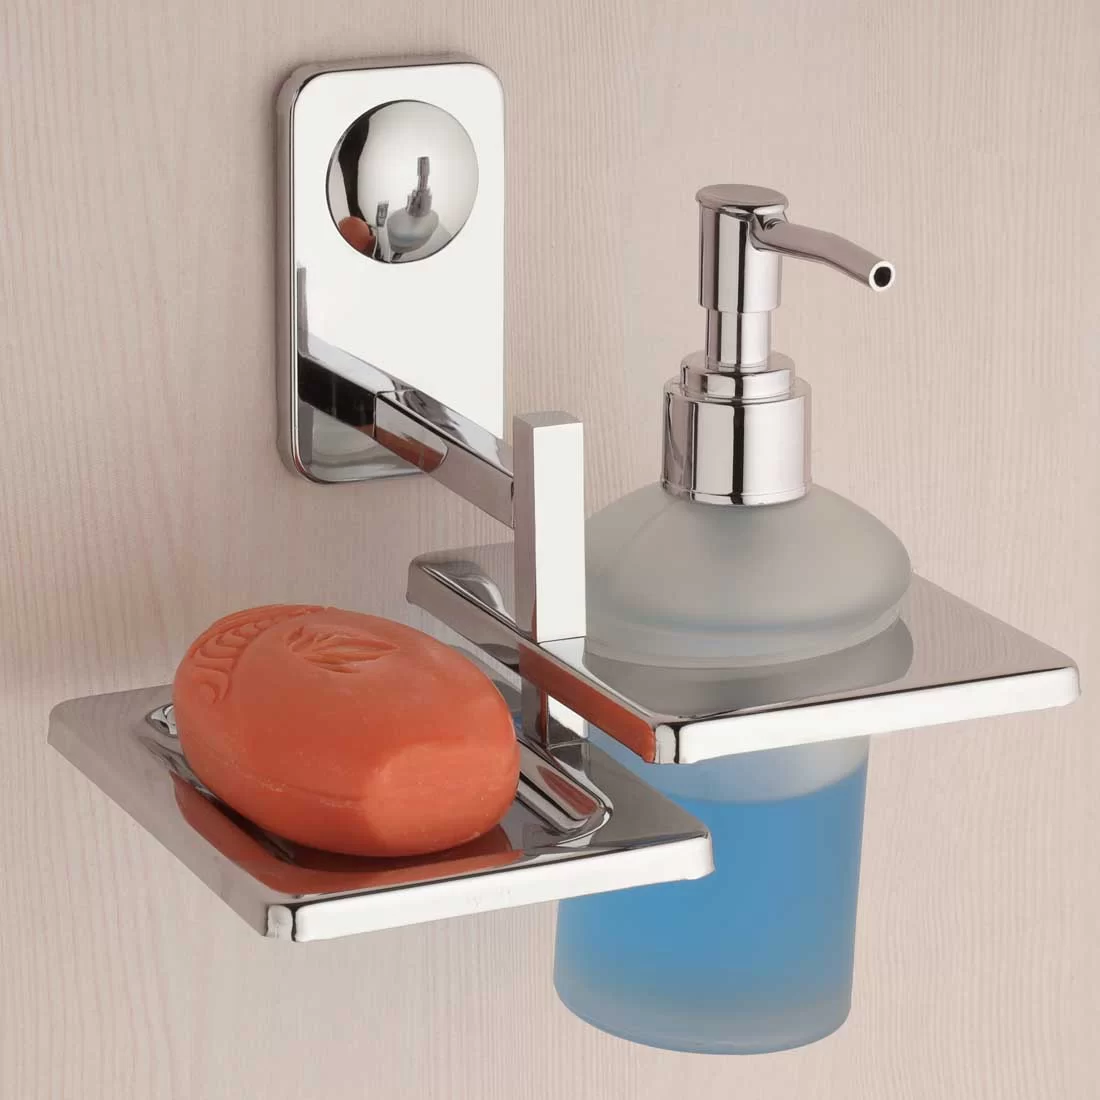 5 Pcs Silicone Draining Soap Dish, Bar Soap Holder for Tub